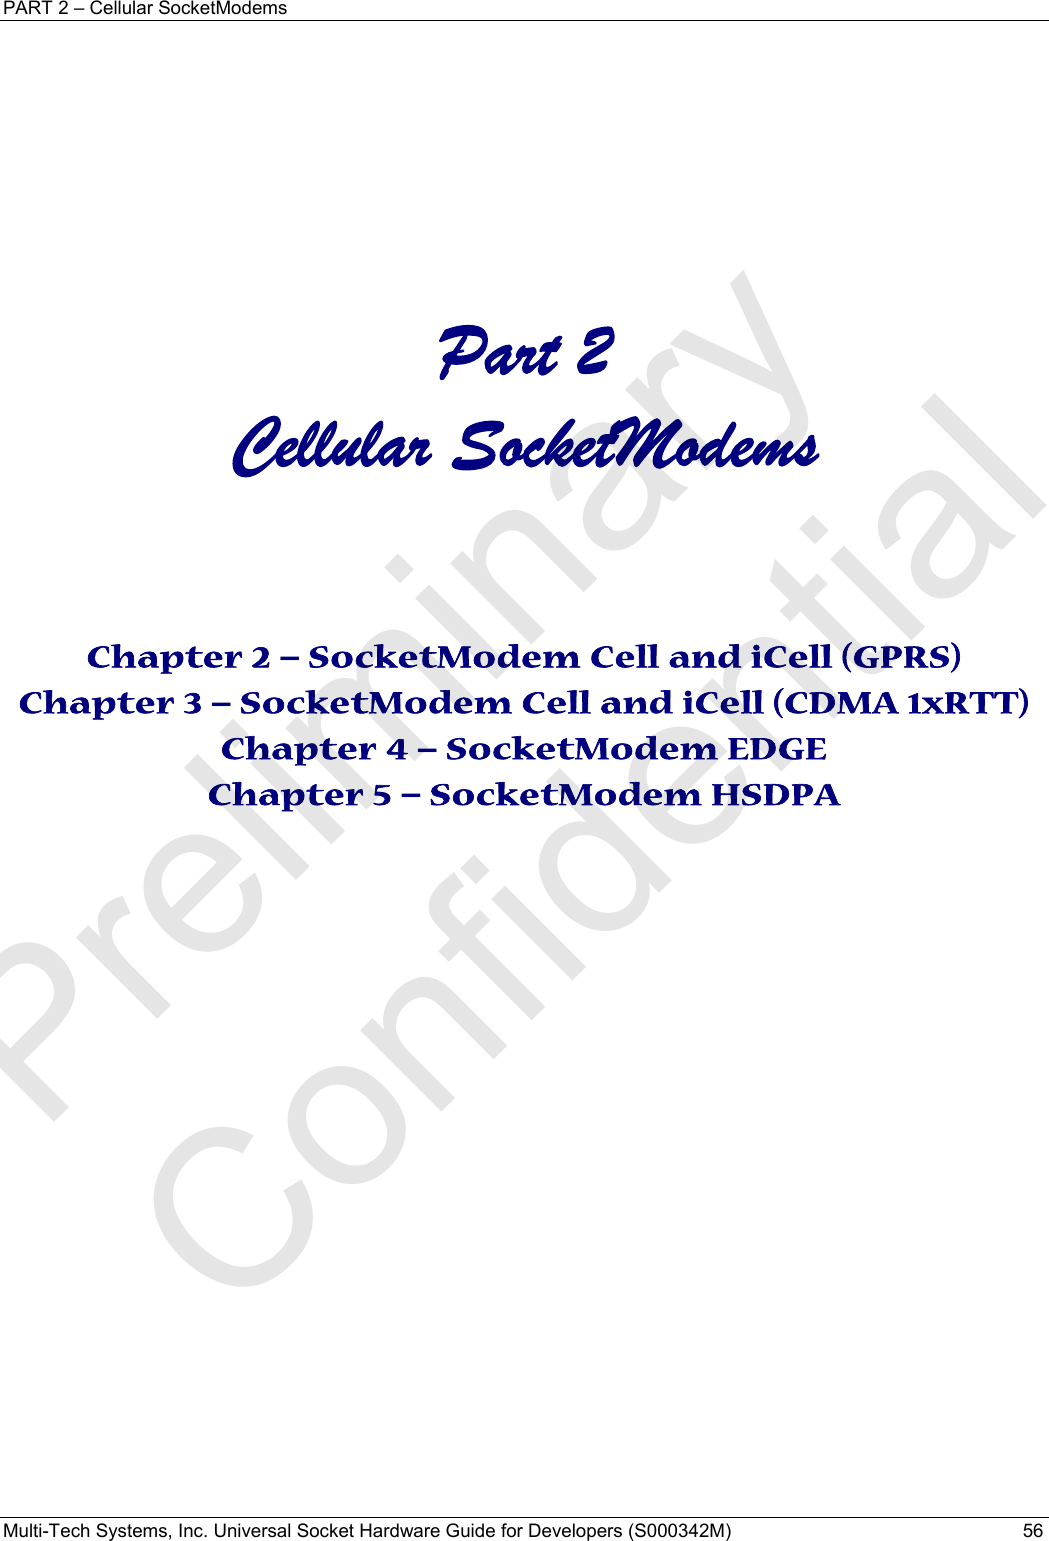 PART 2 – Cellular SocketModems Multi-Tech Systems, Inc. Universal Socket Hardware Guide for Developers (S000342M)  56     Part 2 Cellular SocketModems      Chapter 2 – SocketModem Cell and iCell (GPRS) Chapter 3 – SocketModem Cell and iCell (CDMA 1xRTT) Chapter 4 – SocketModem EDGE Chapter 5 – SocketModem HSDPA     Preliminary  Confidential